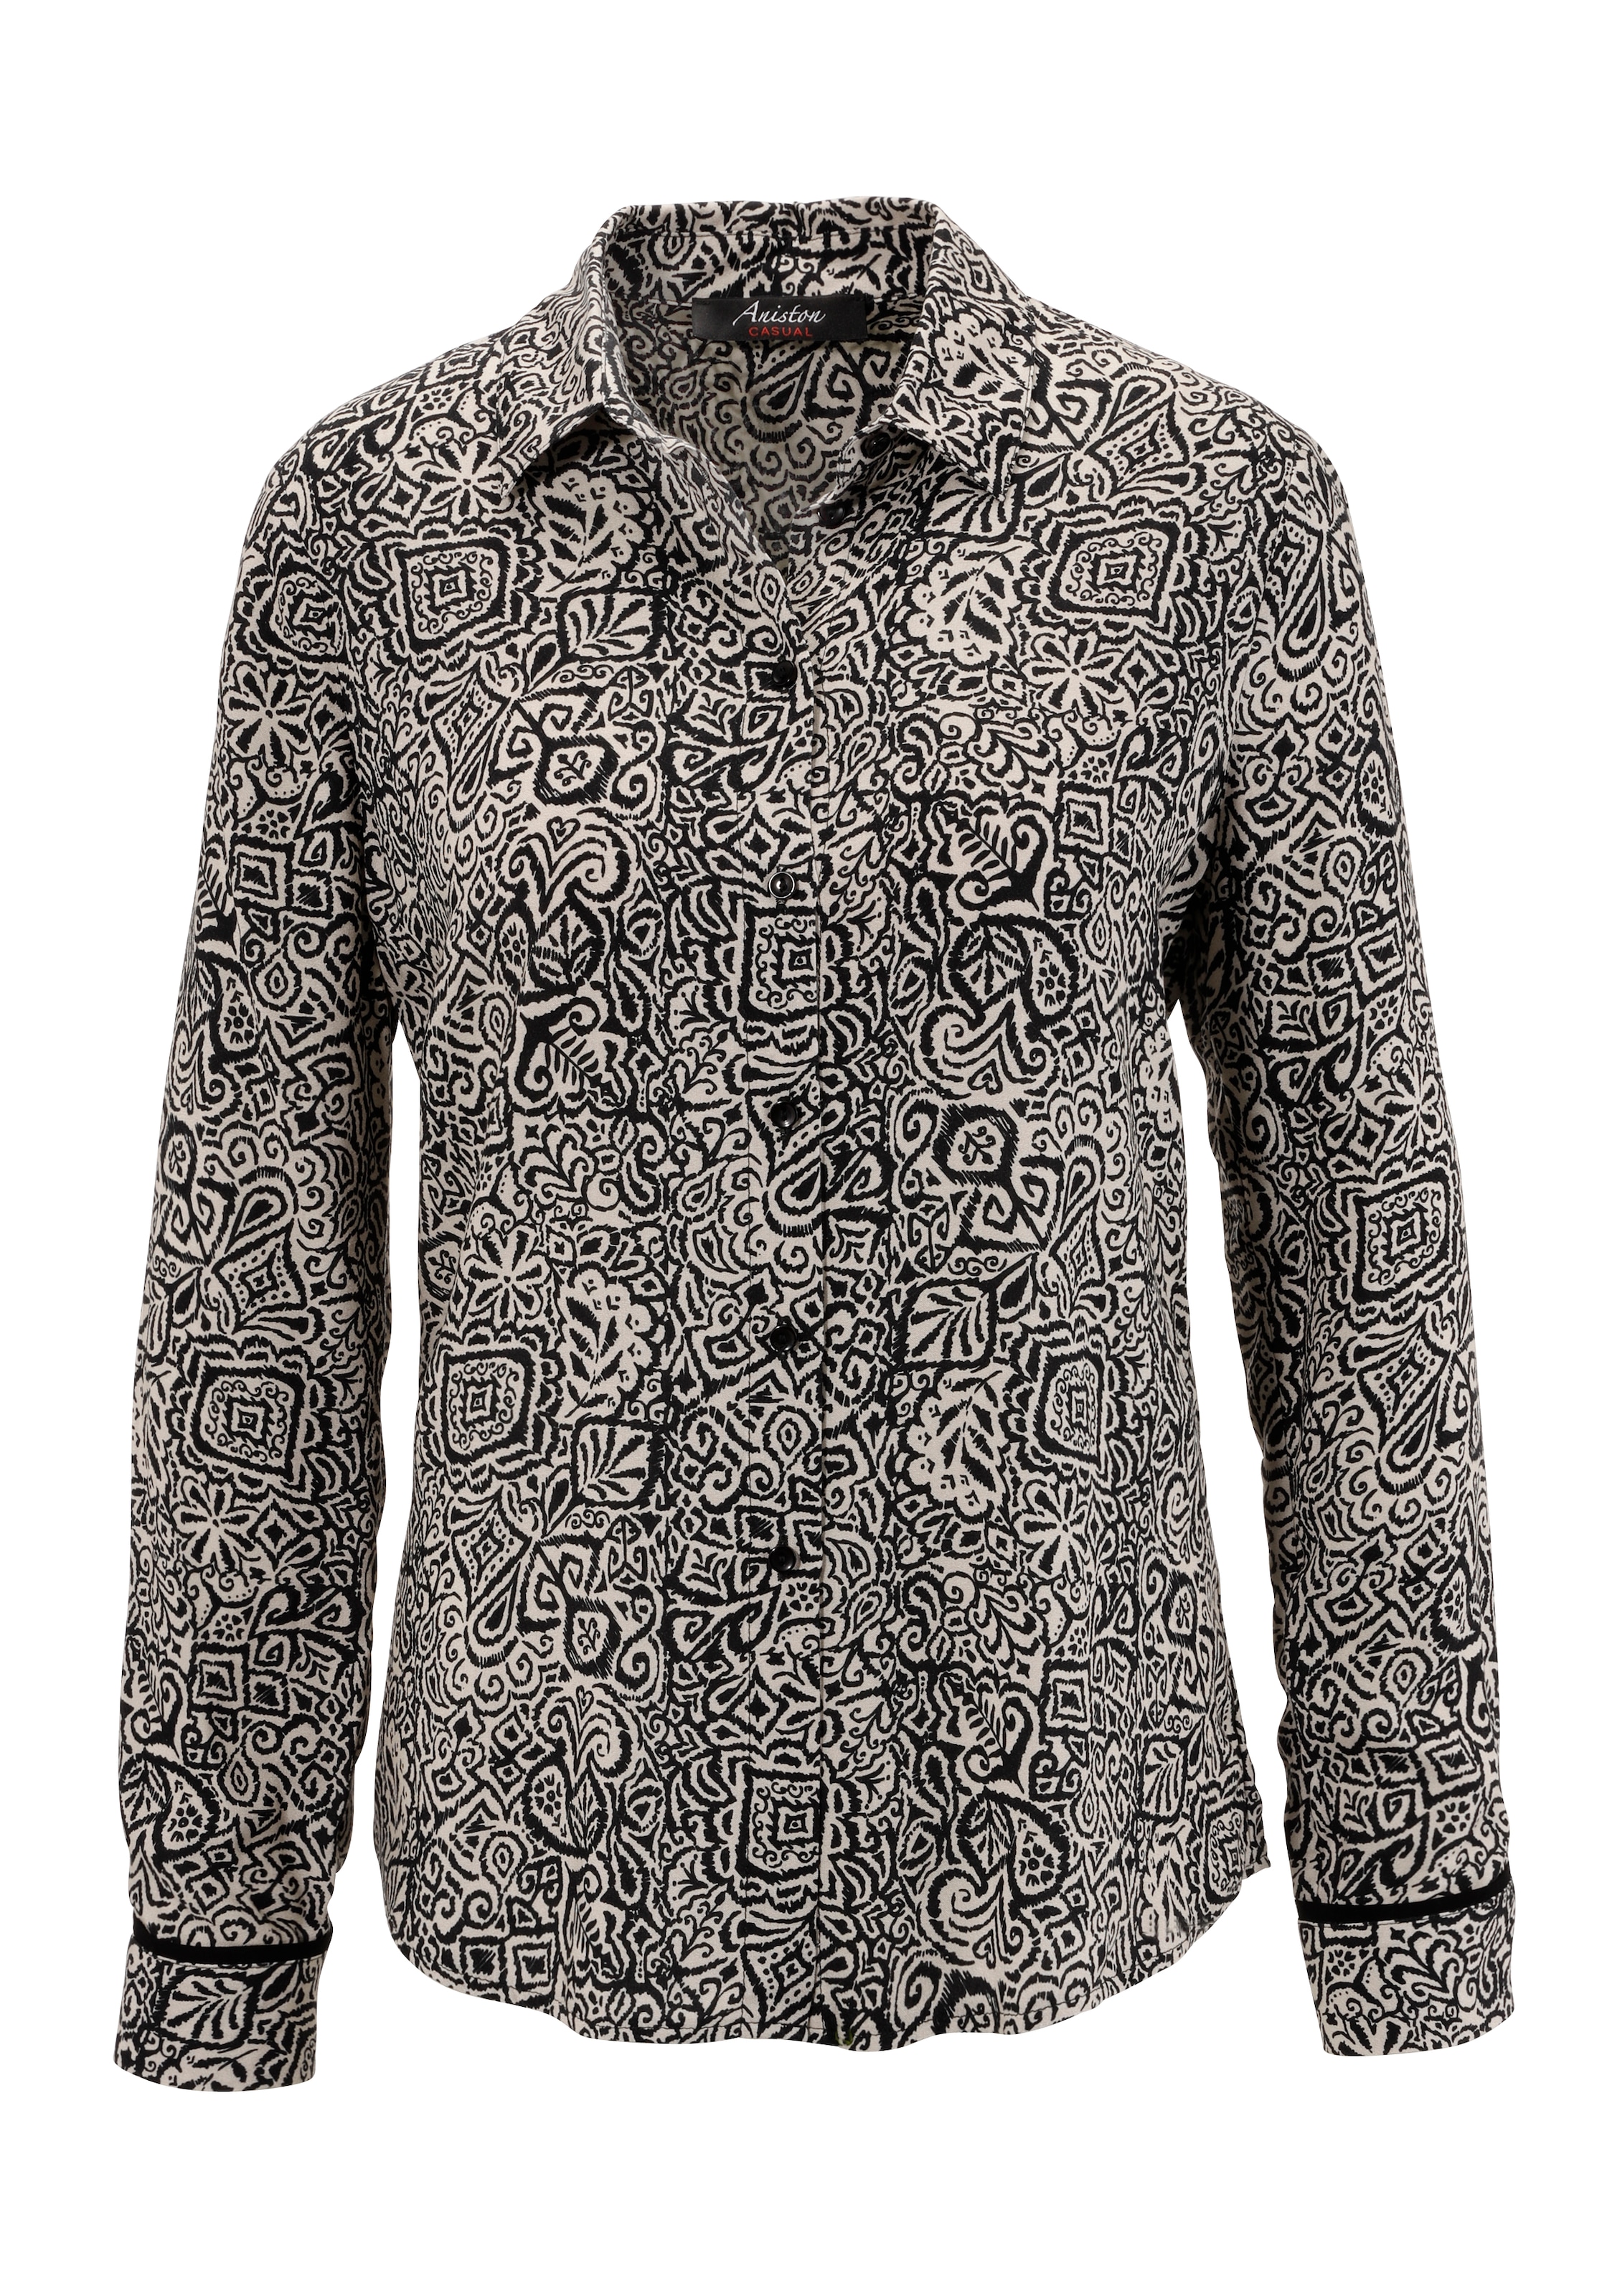 Aniston CASUAL Hemdbluse, mit interessantem NEUE - Alloverdruck | KOLLEKTION BAUR kaufen